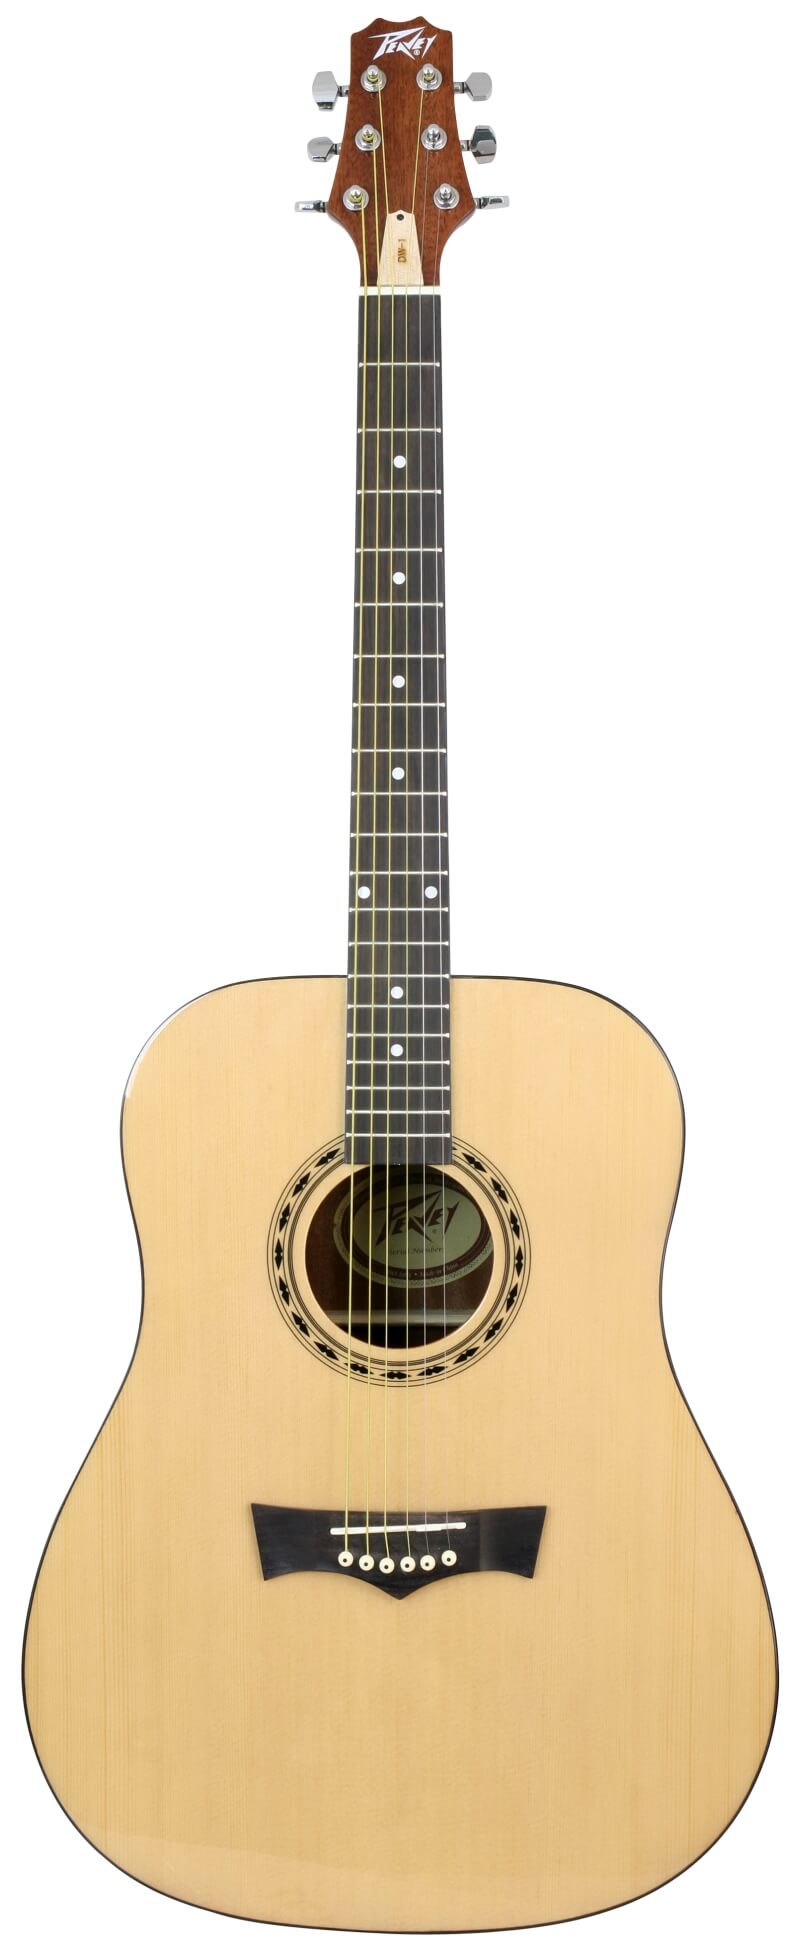 Peavey DW 1 Acoustic Guitar, image credit: Peavey